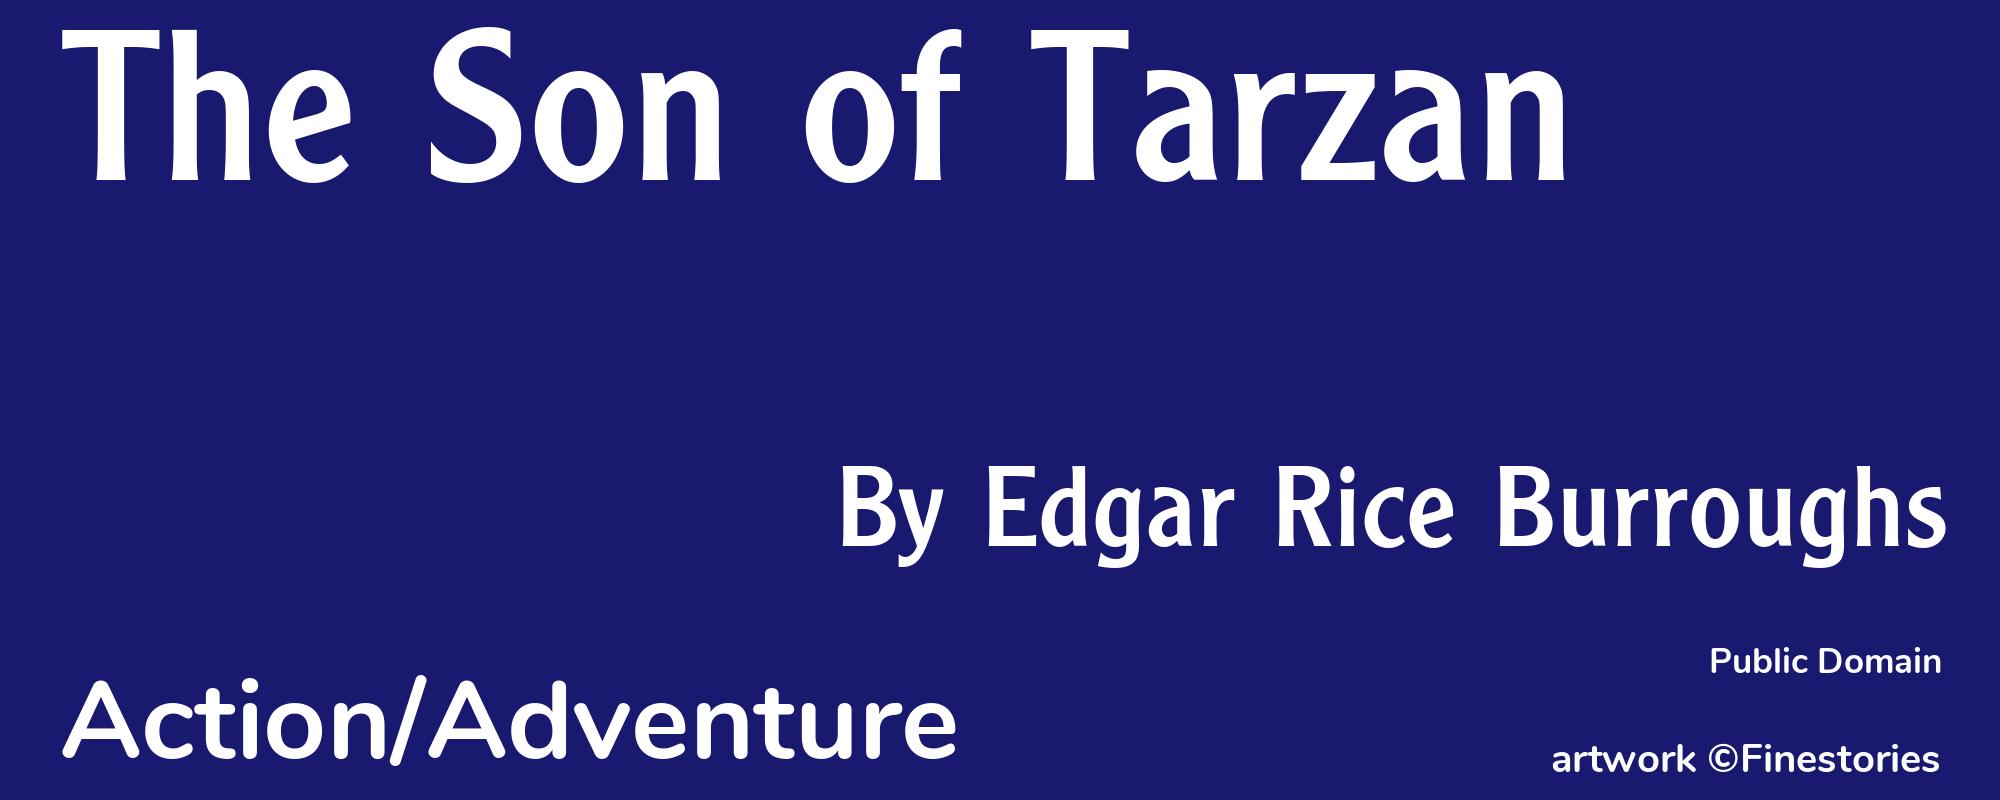 The Son of Tarzan - Cover